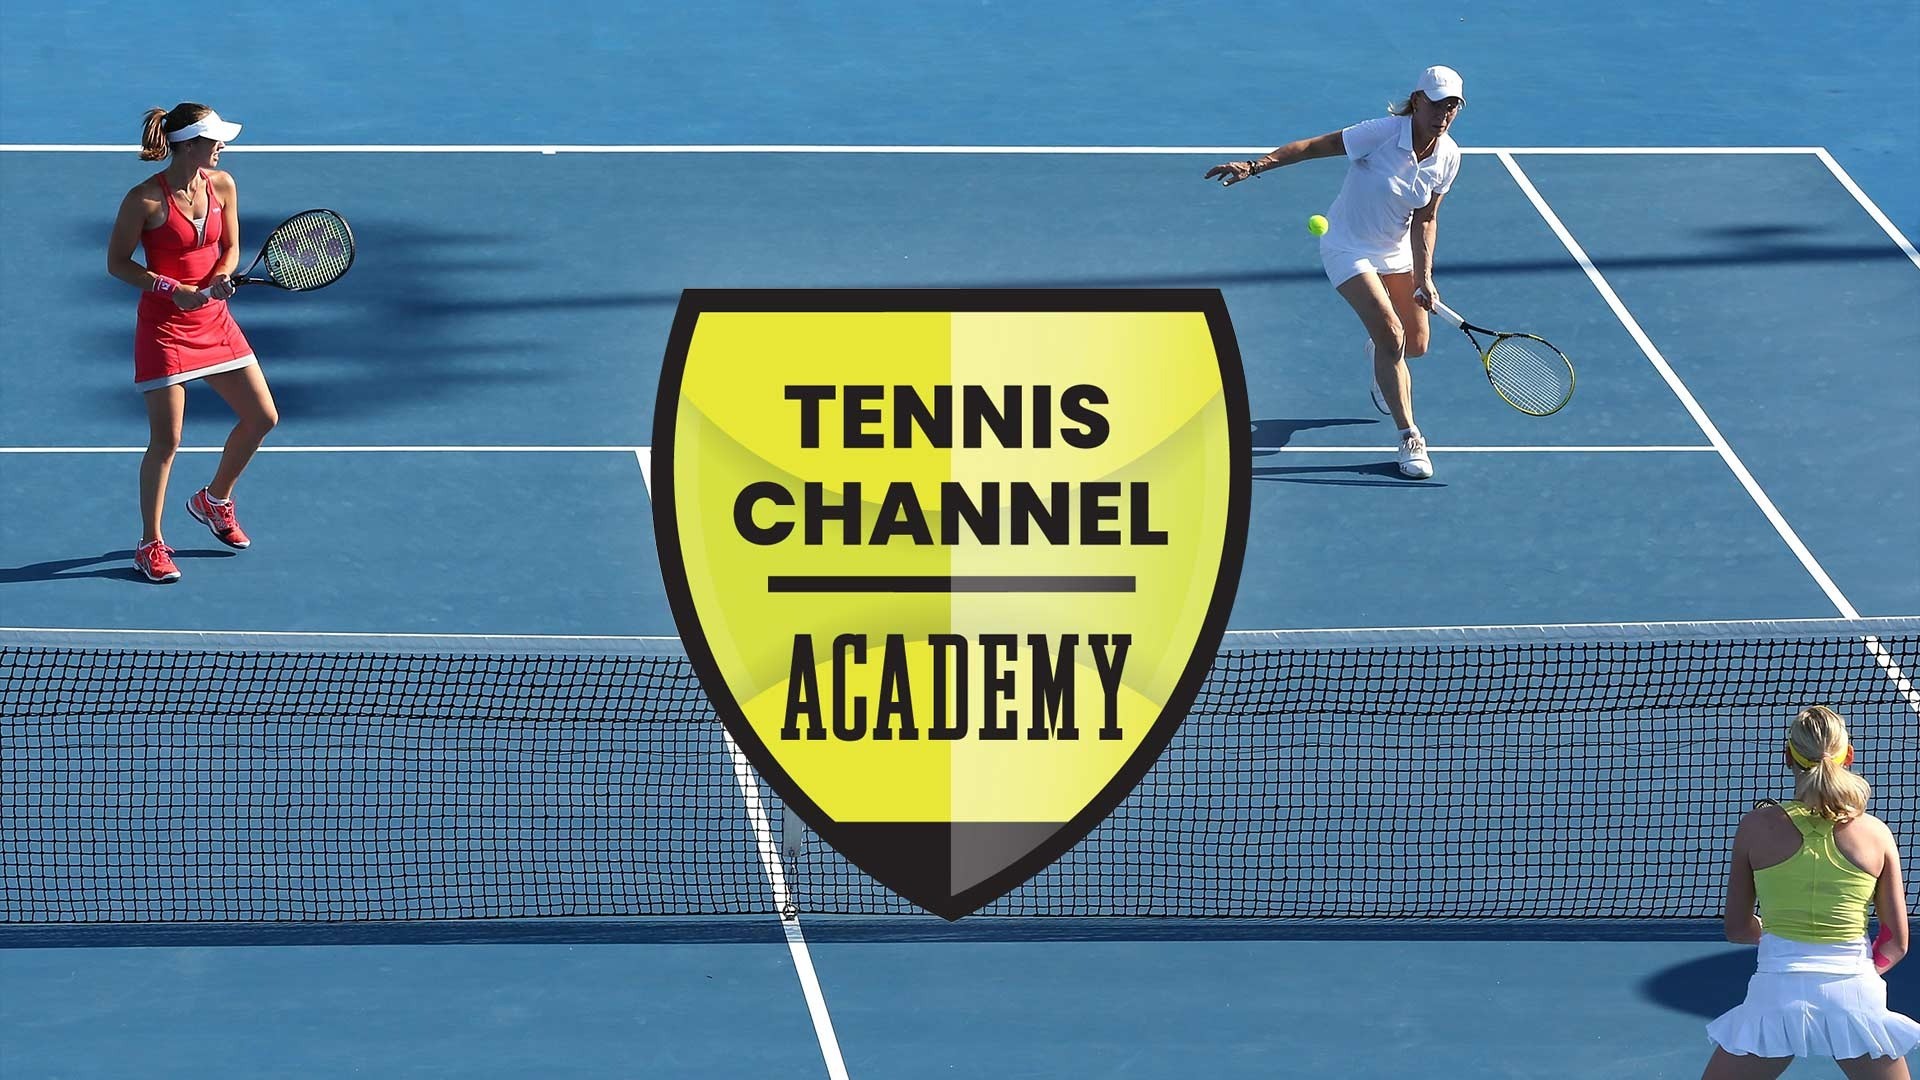 Tennis Channel Academy